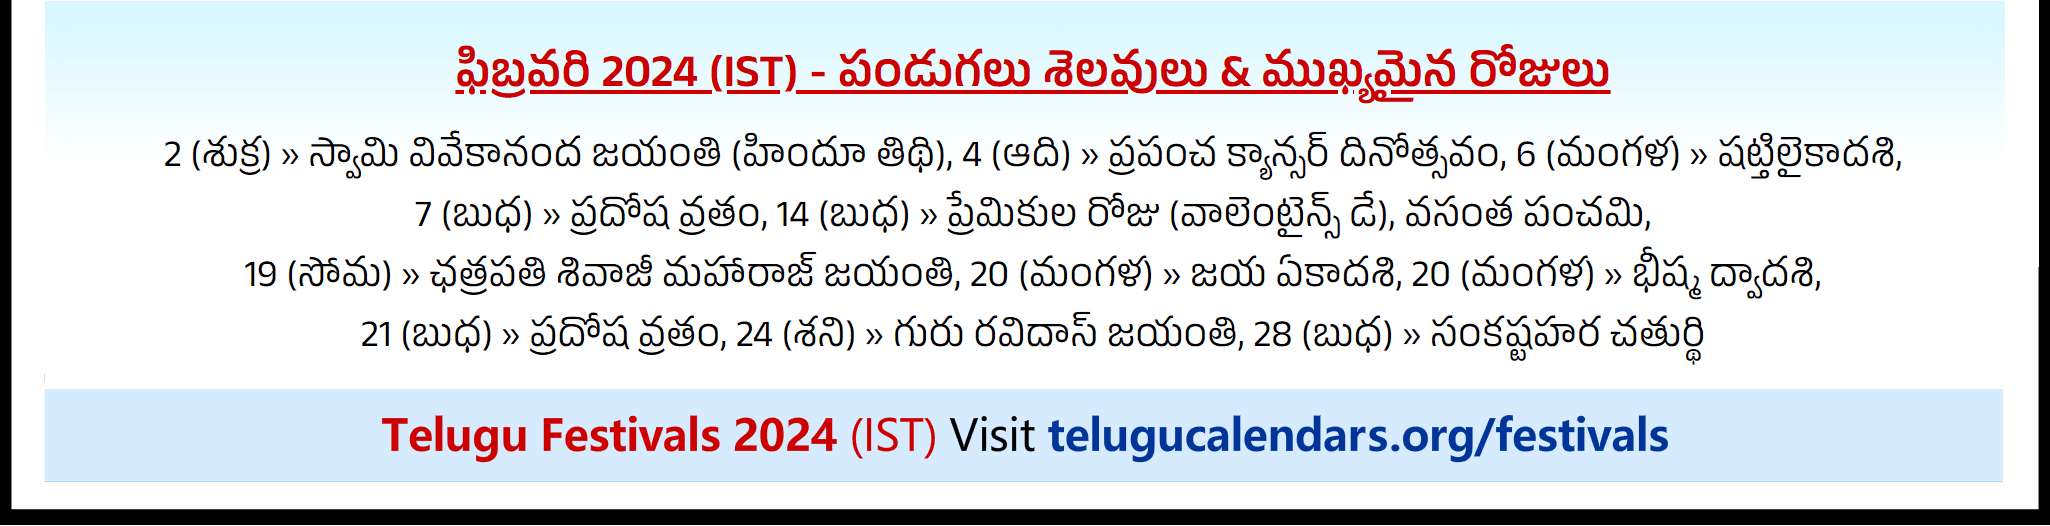 Telugu Festivals 2024 February Atlanta